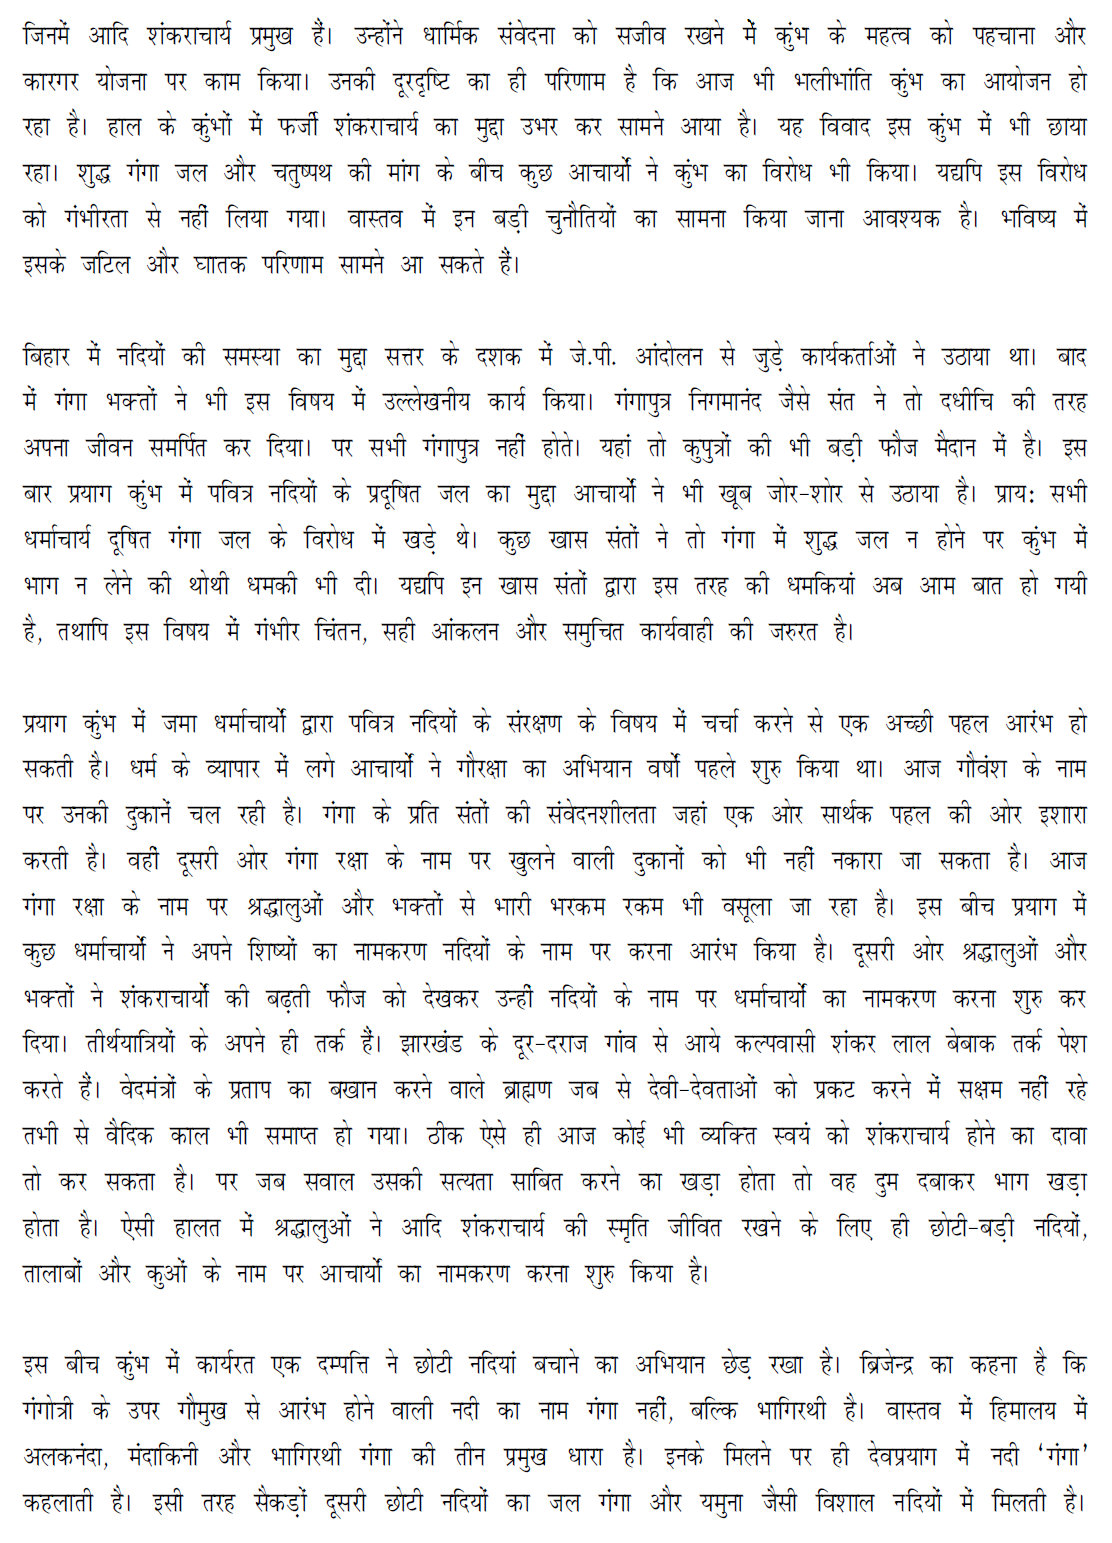 Essay on humanity in hindi